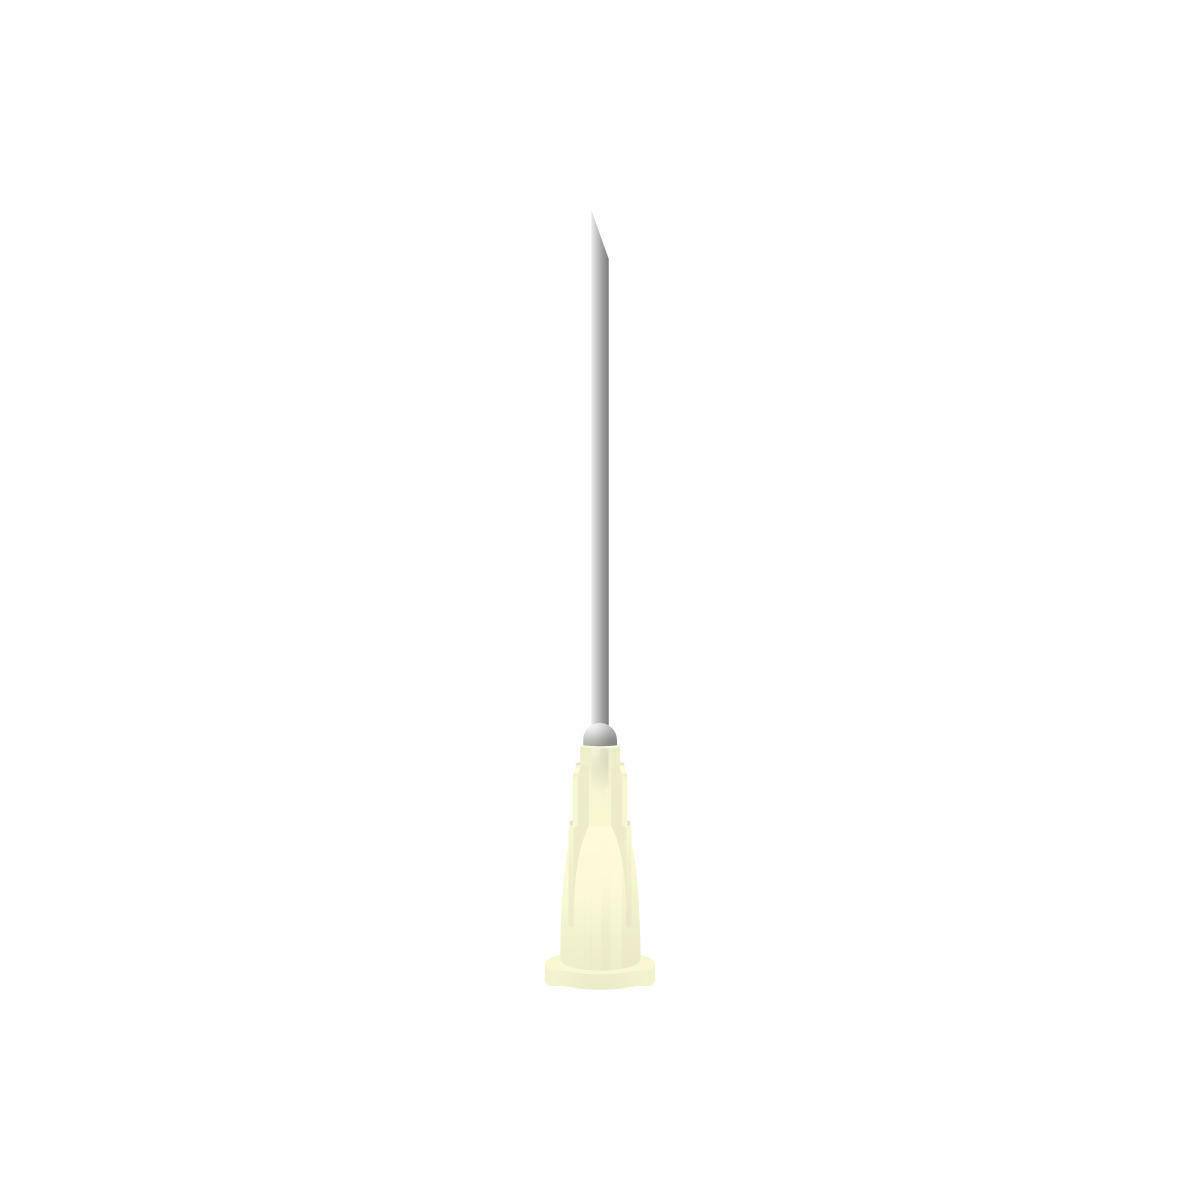 16g White 1.5 inch BD Microlance Needles